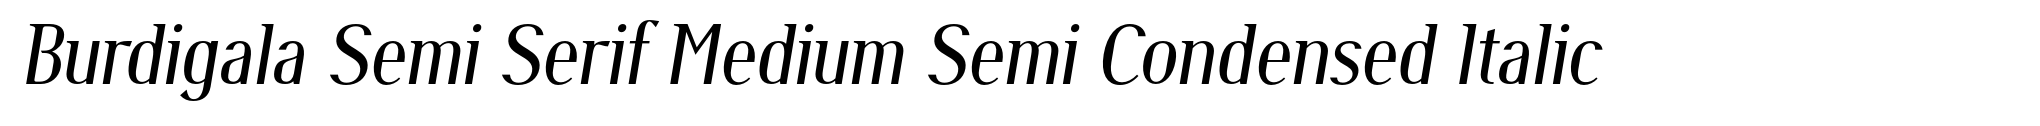 Burdigala Semi Serif Medium Semi Condensed Italic image